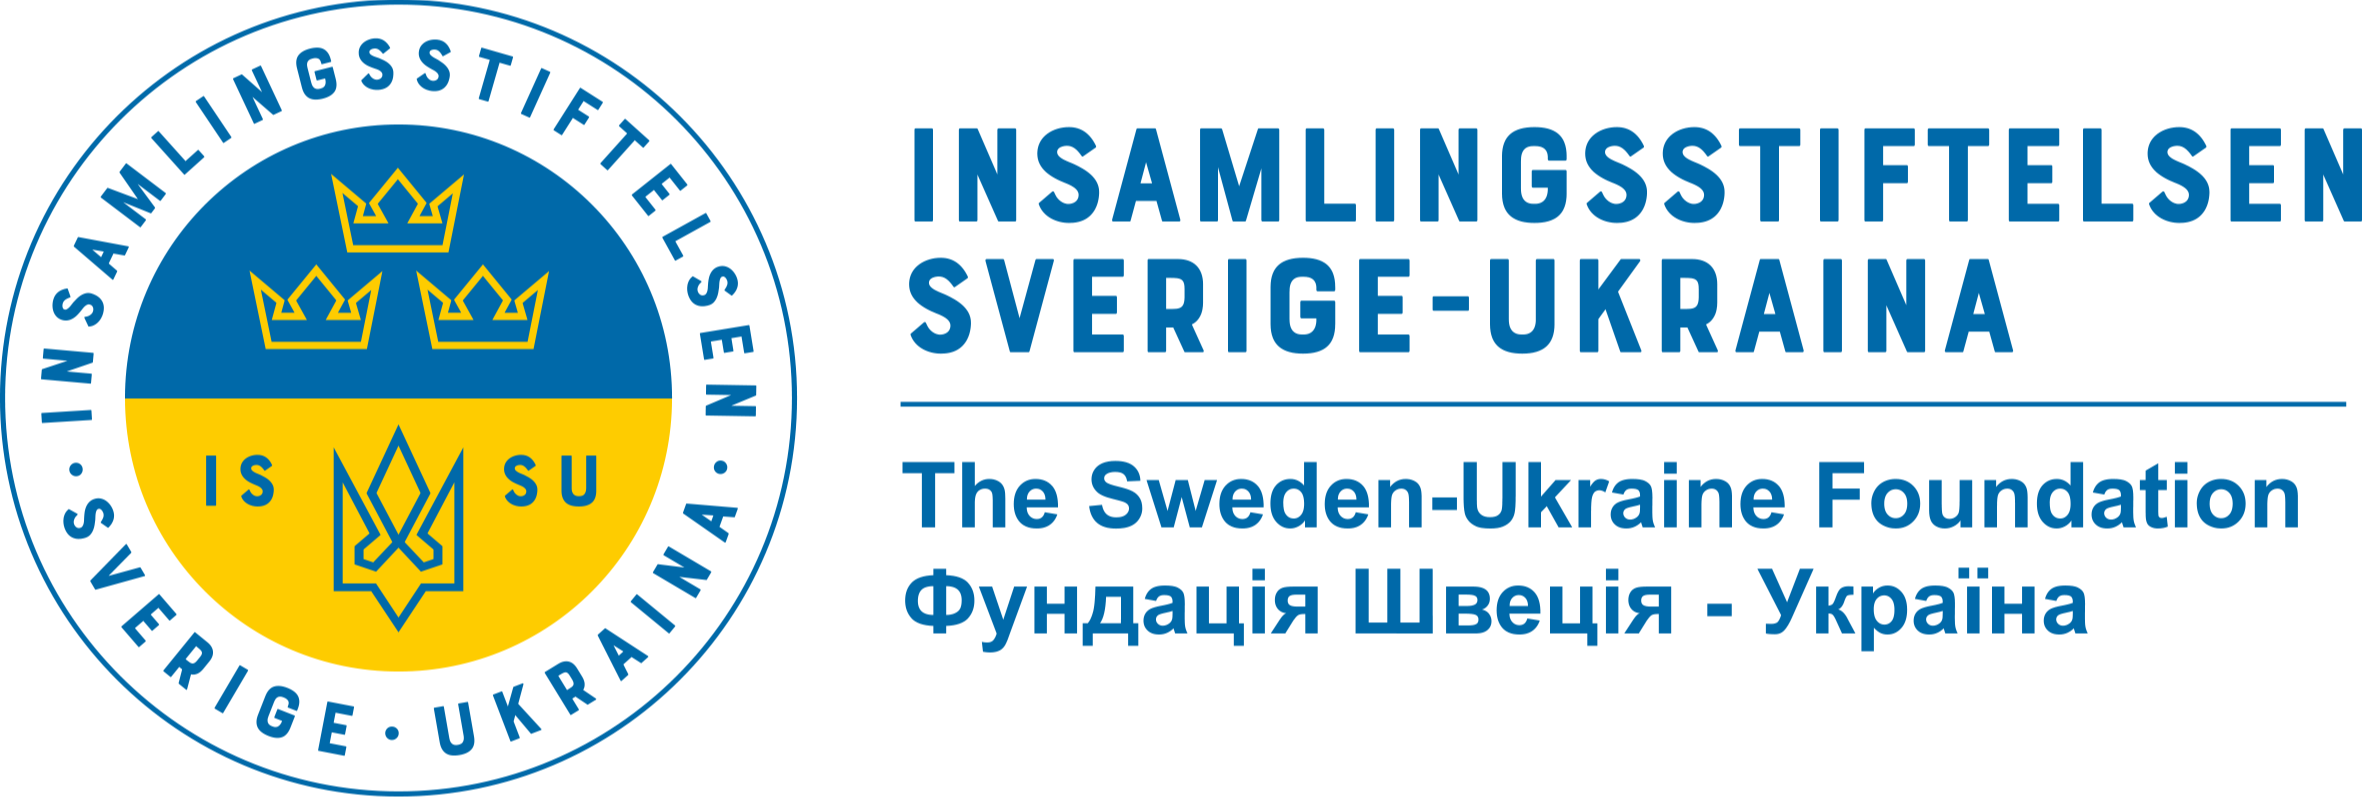 Insamlingsstiftelsen Sverige-Ukraina/The Sweden-Ukraine Foundation logo